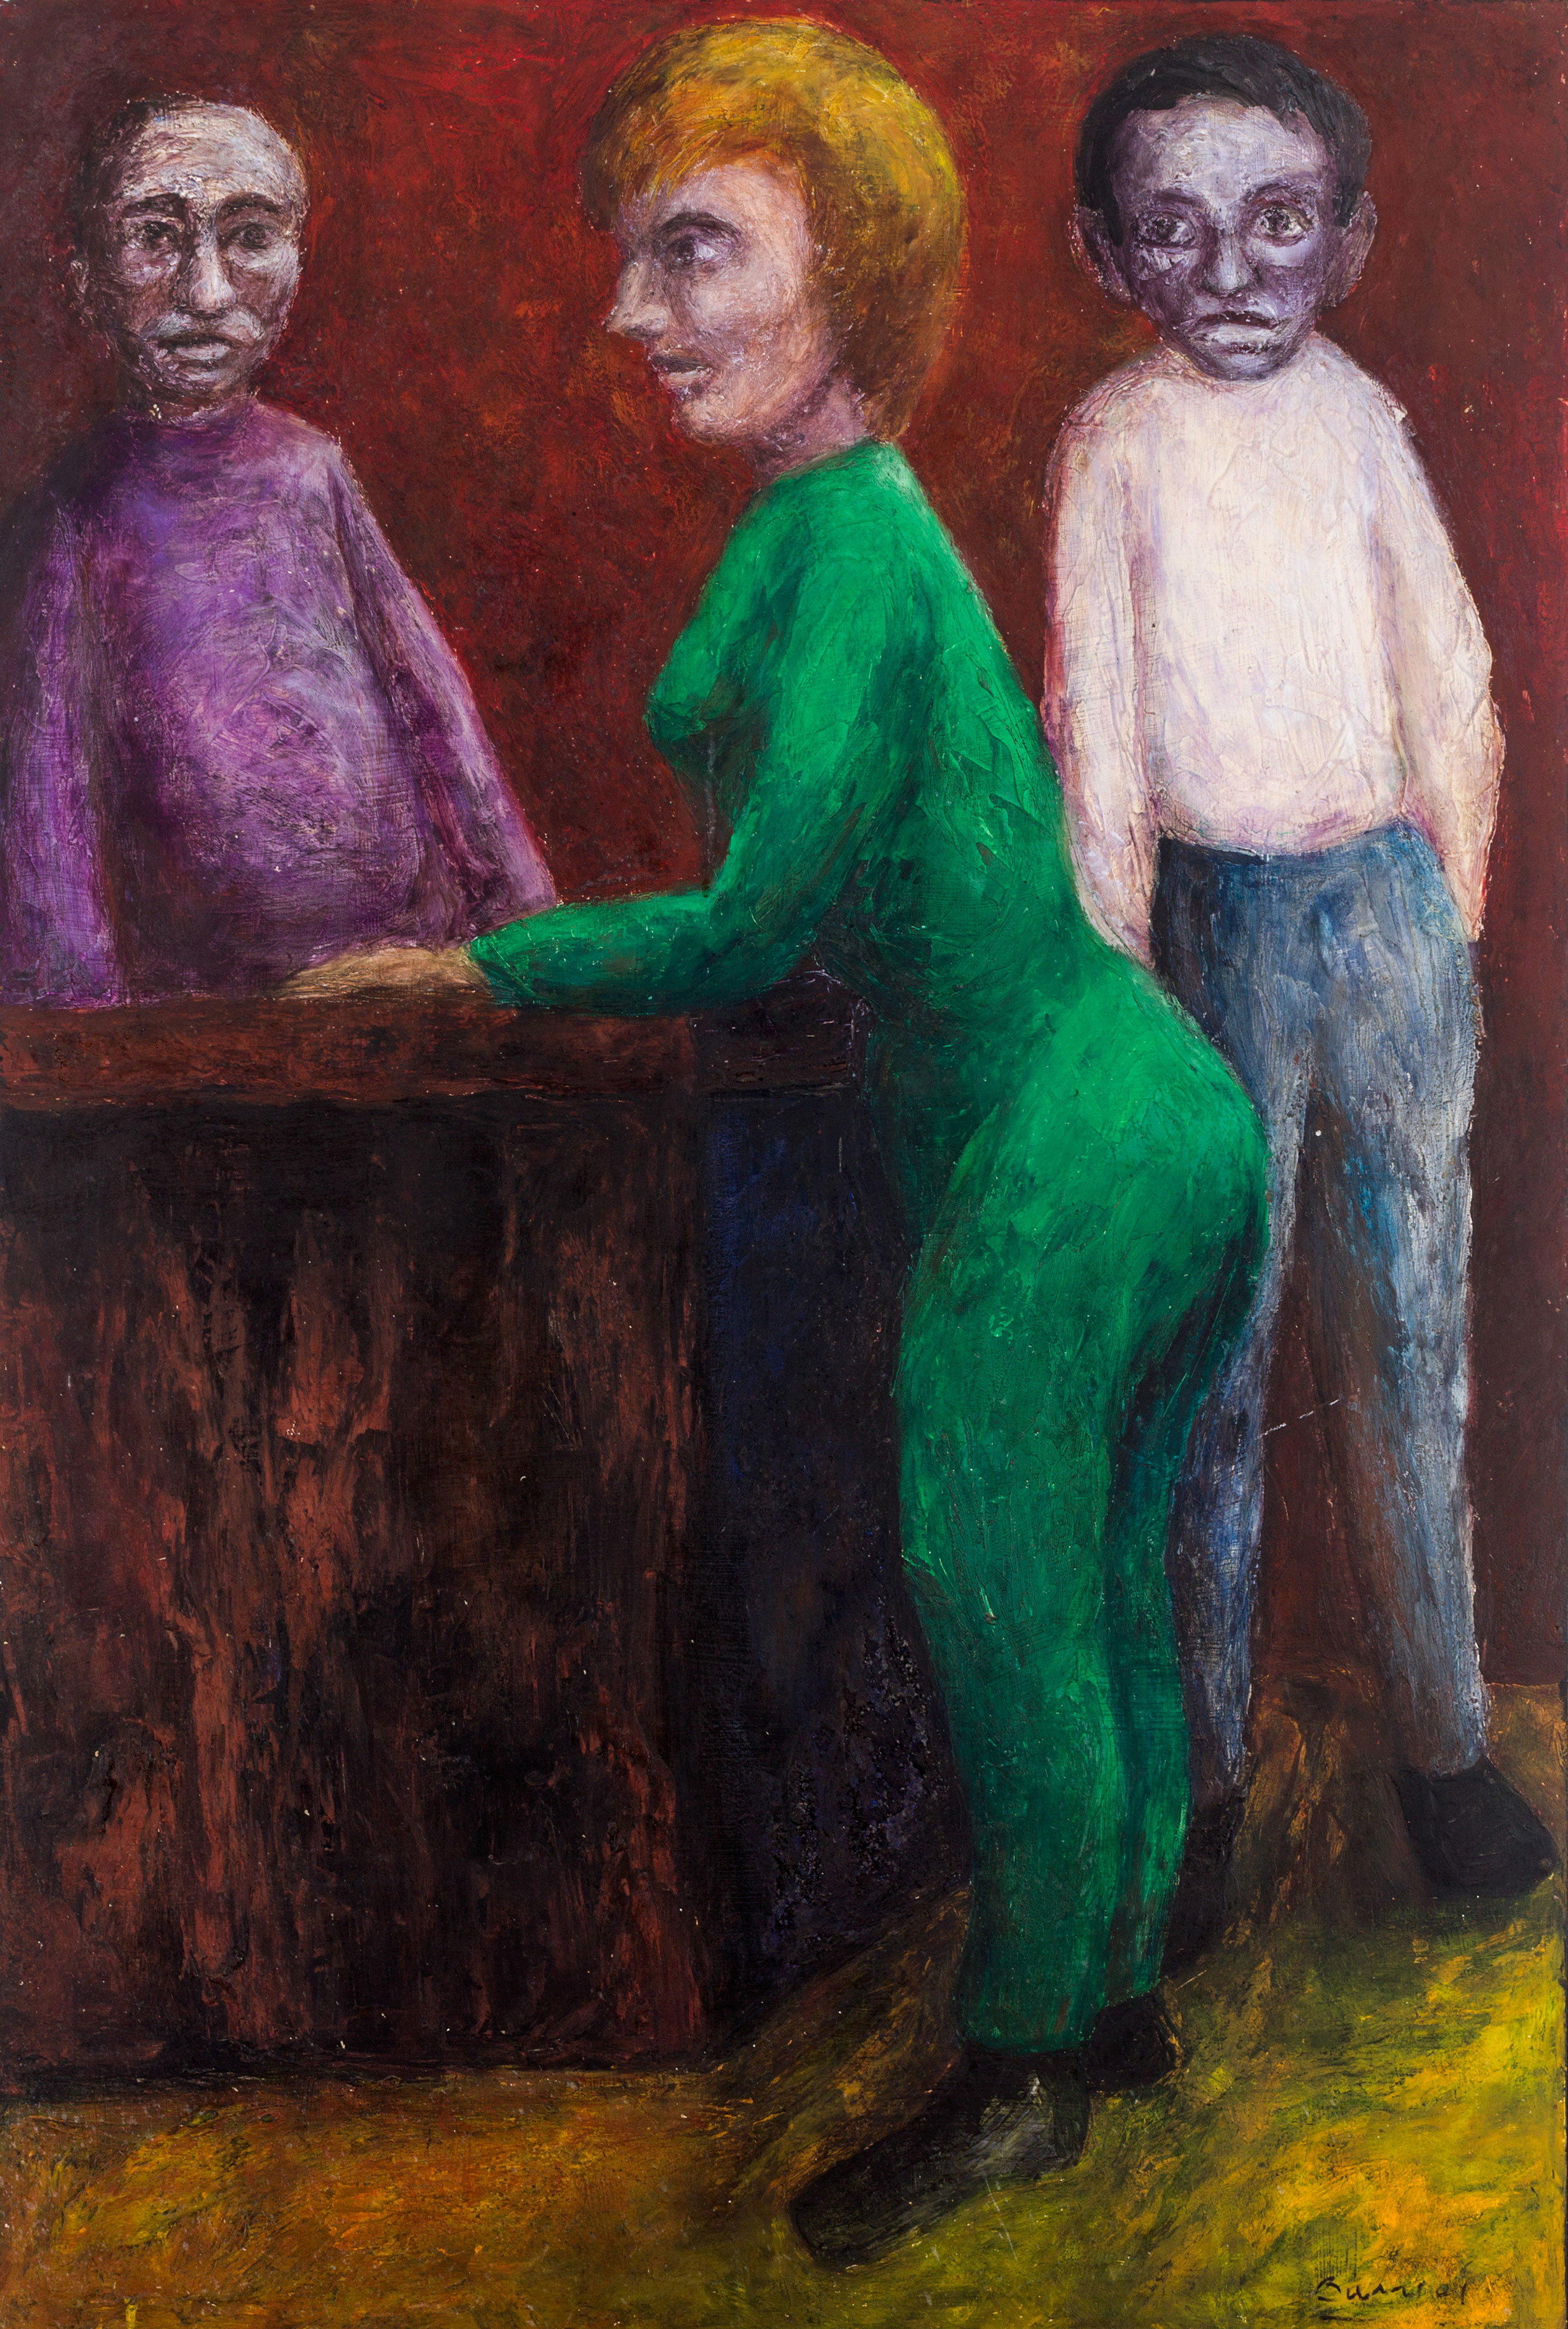 Galerie Barbara Thumm \ Teresa Burga – Arte Nuevo \ Untitled (Figurative scene with a woman in green between two men) (1965)